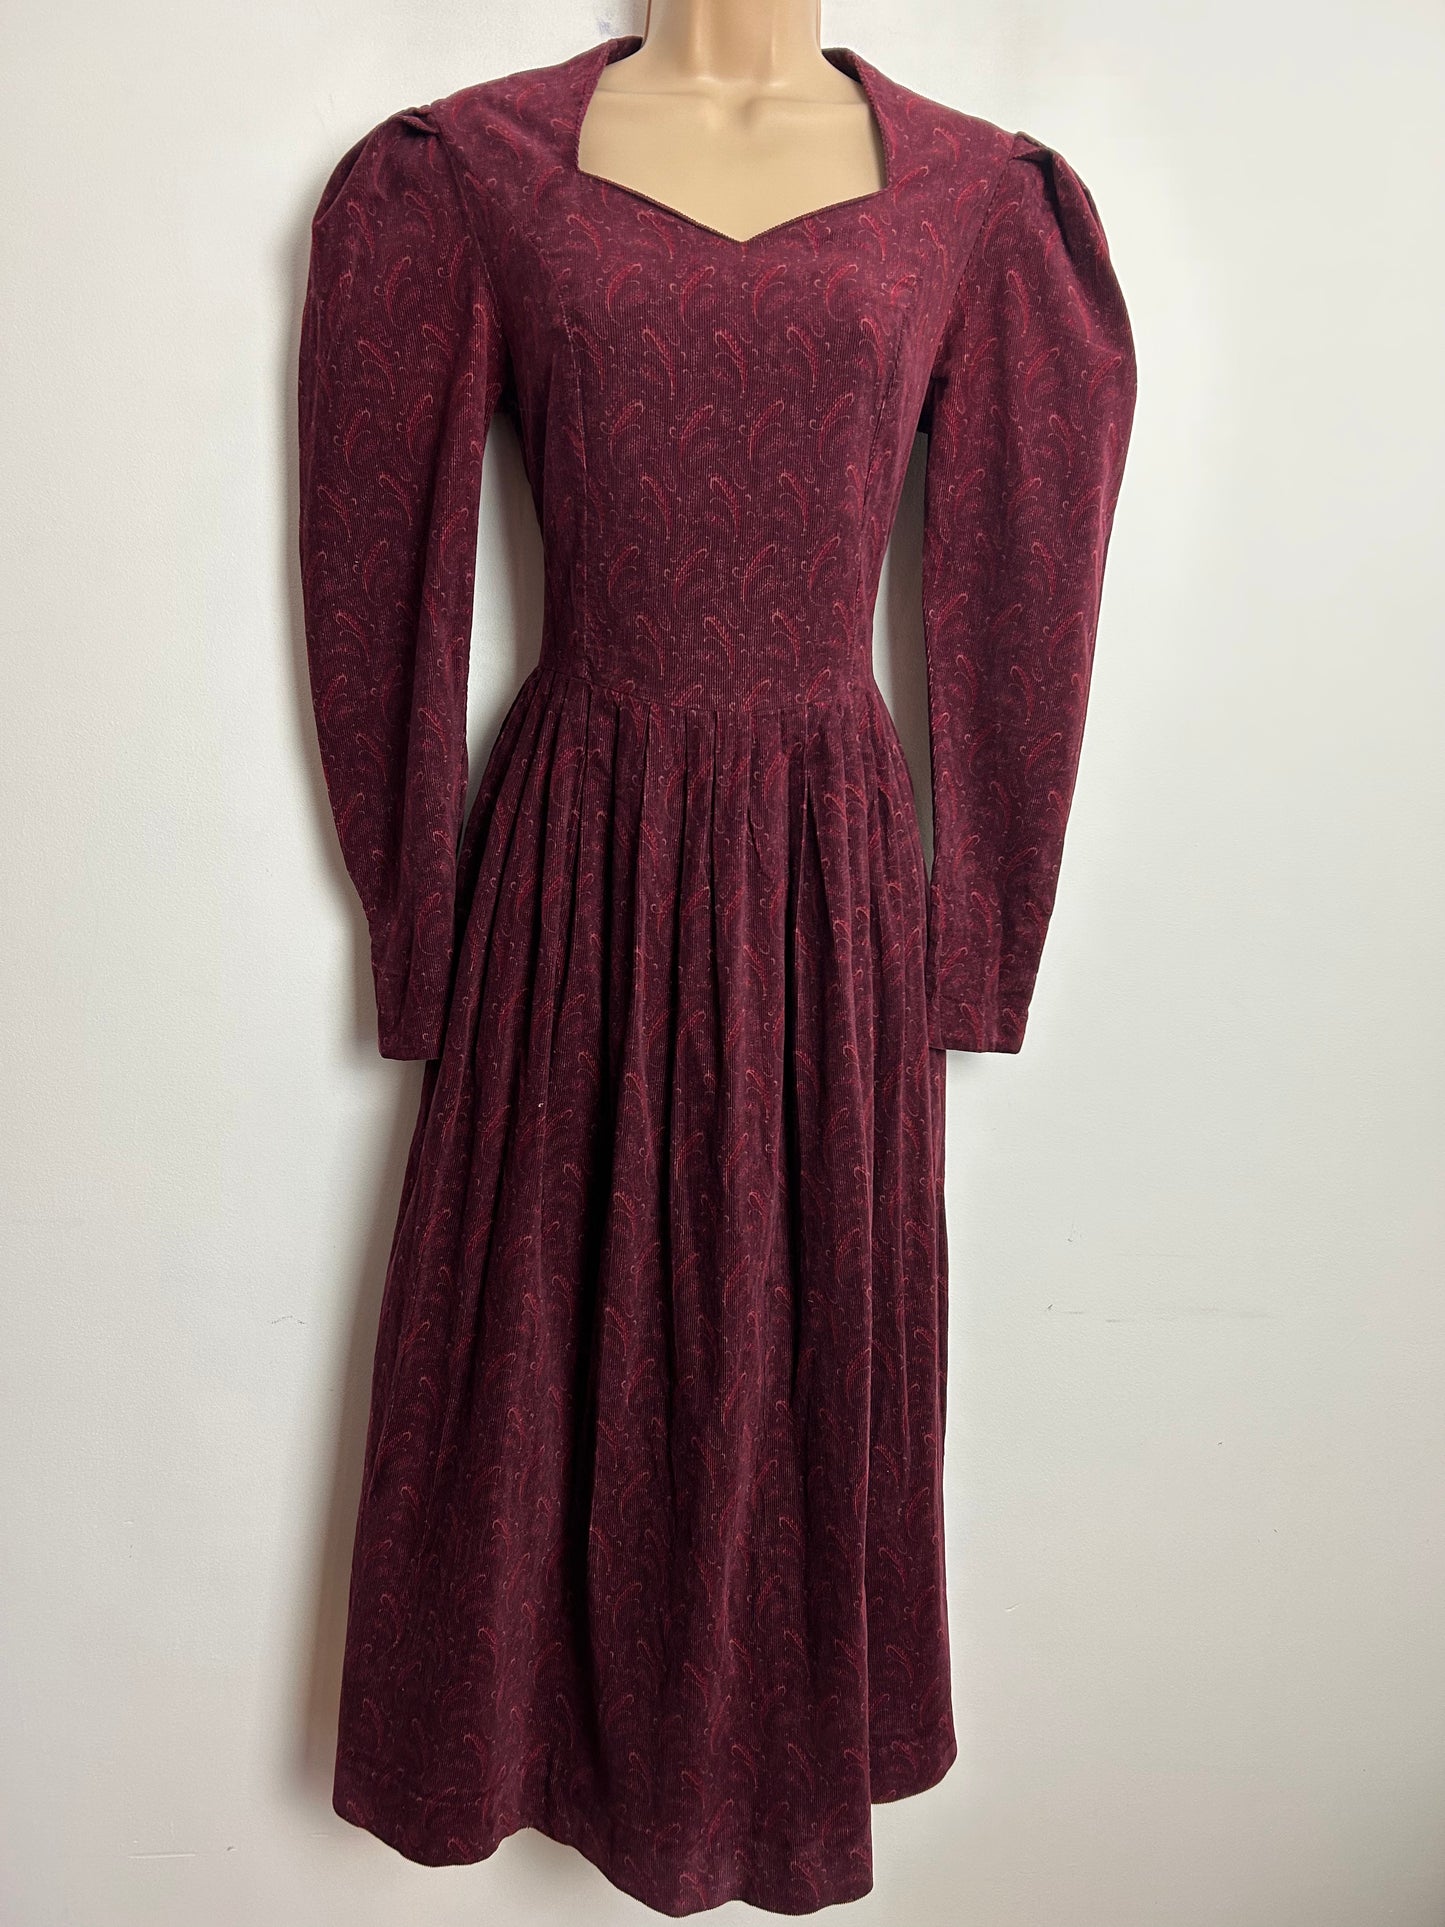 Vintage 1980s Laura Ashley UK Size 10 (12 On Label) Dark Red Floral Print 100% Cotton Needlecord  Midi Dress